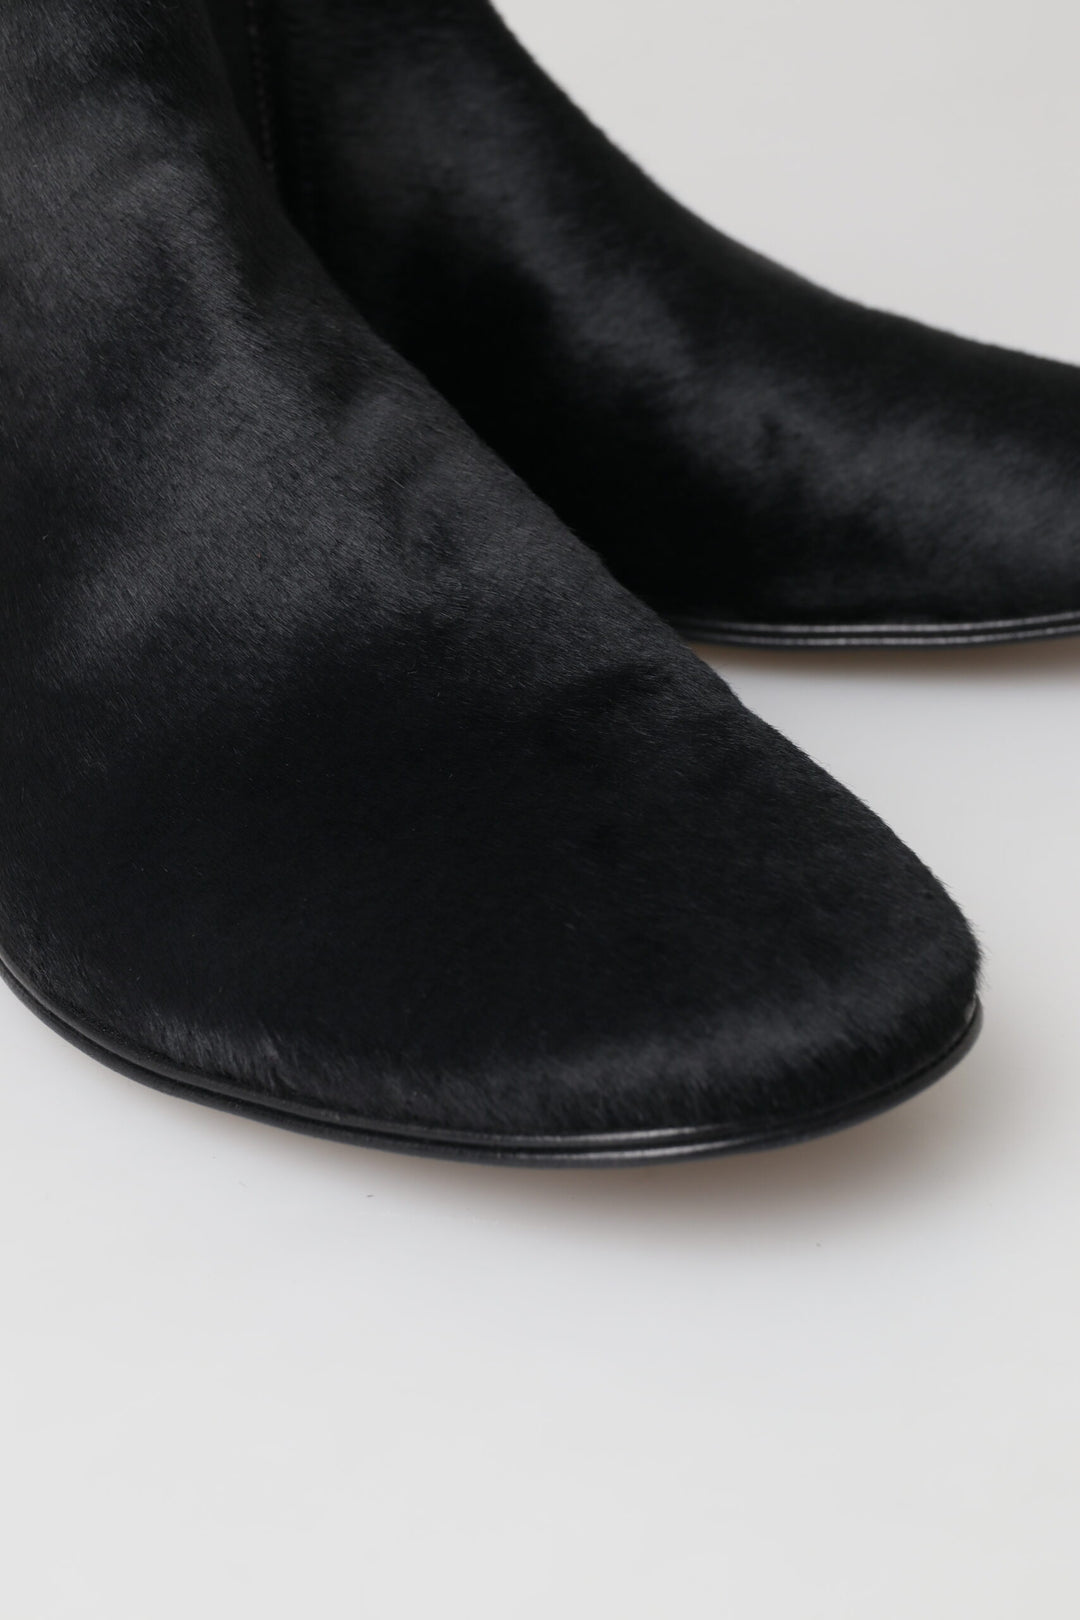 Dolce & Gabbana Elite Italian Leather Chelsea Boots